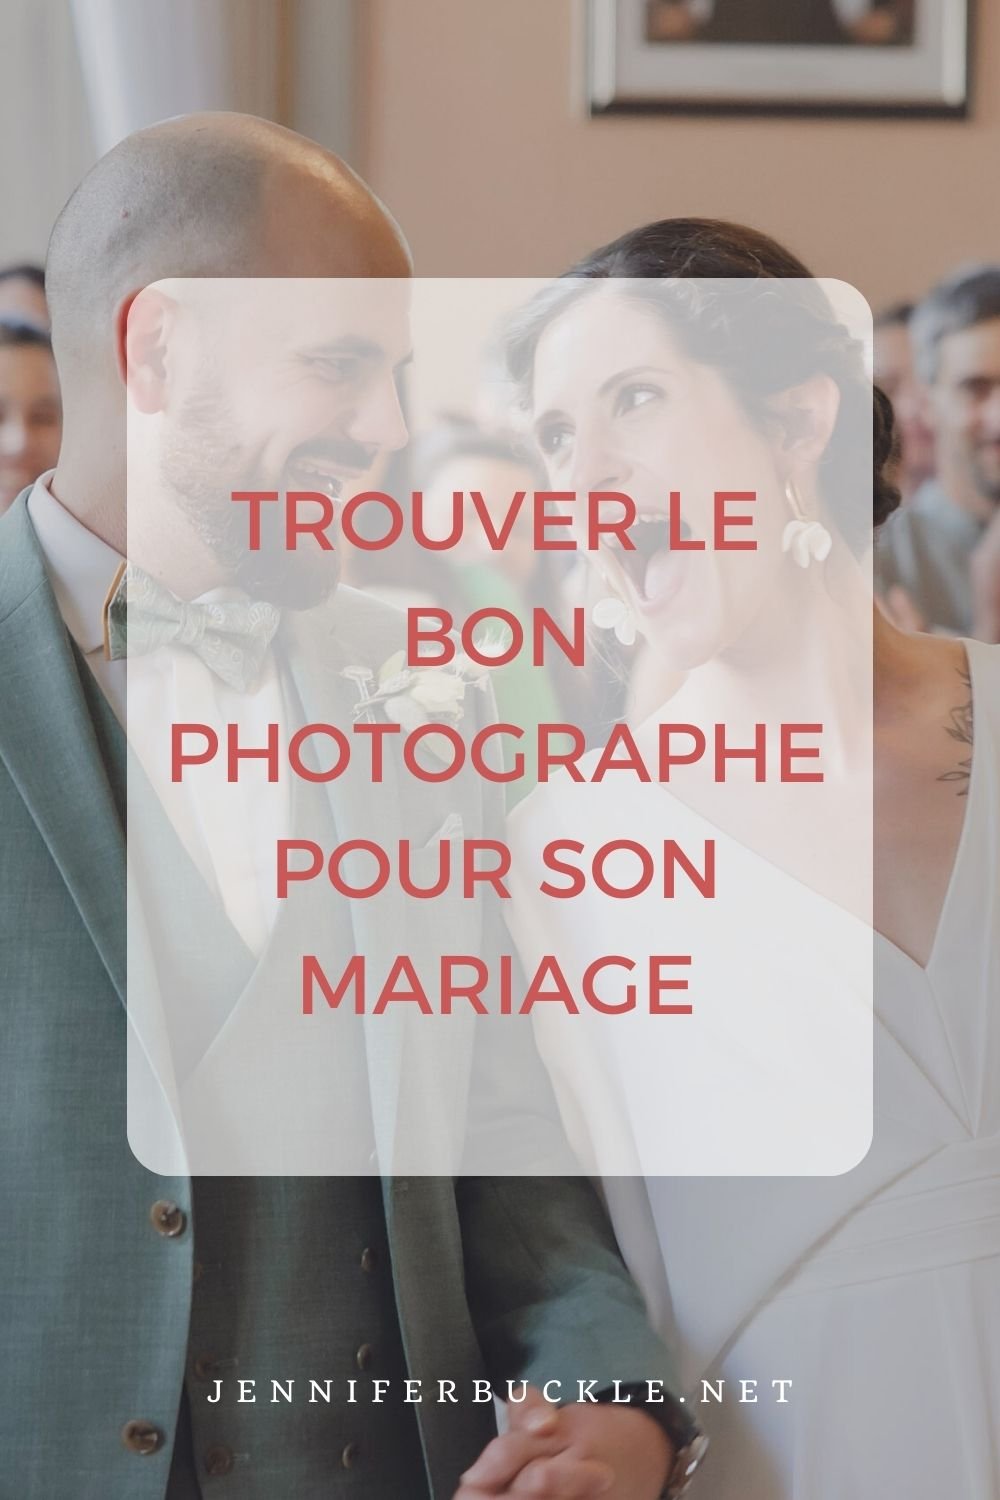 Jennifer Buckle photographe Paris trouver photographe mariage 1.jpg